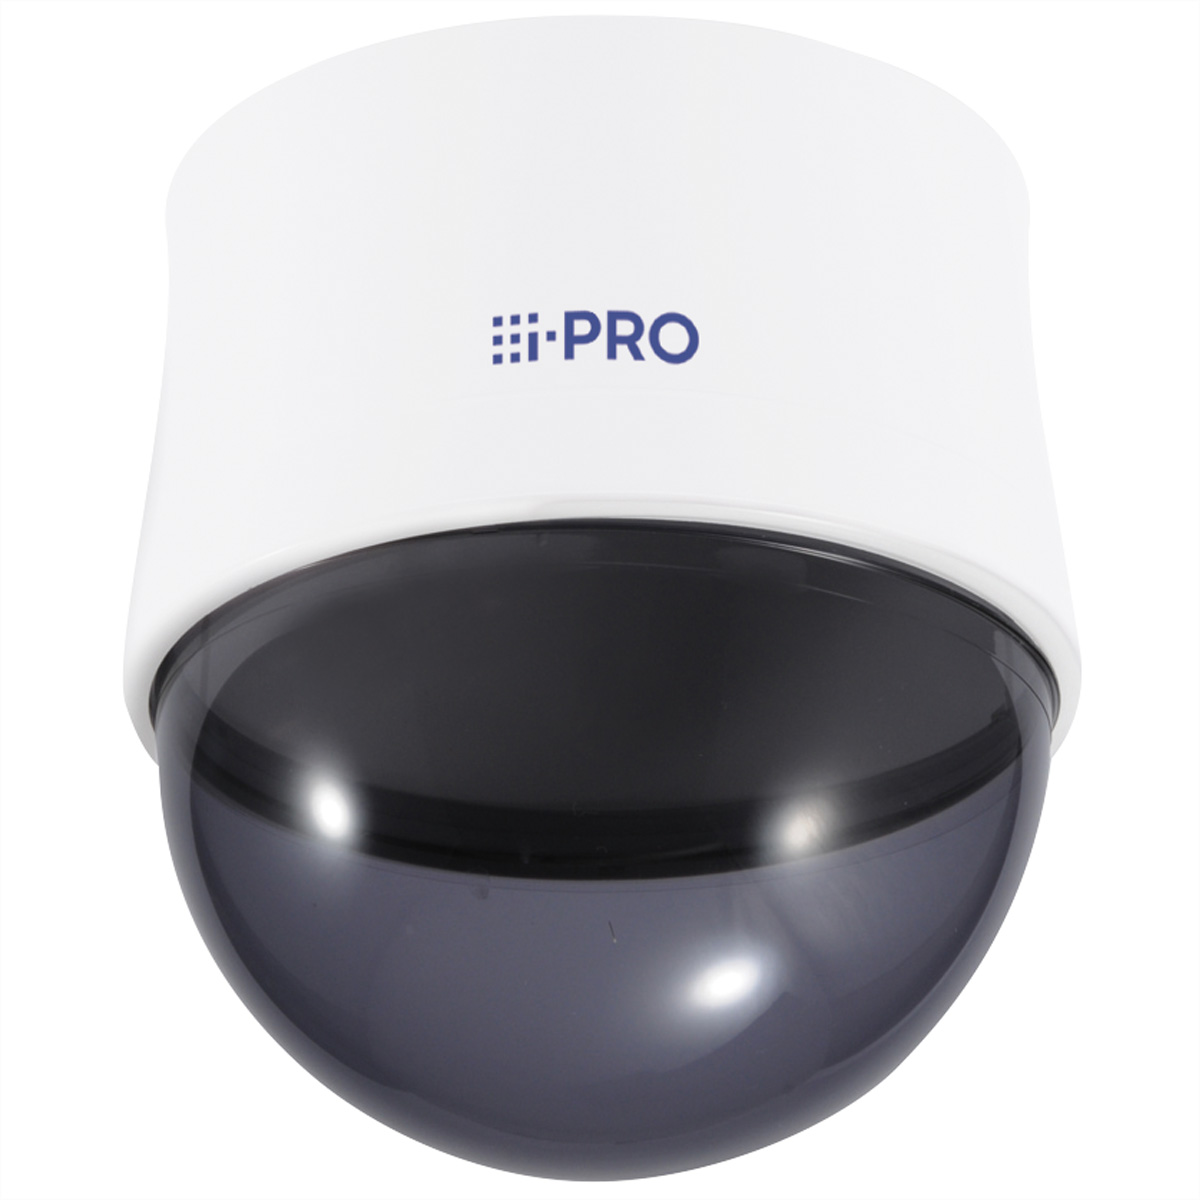 i-PRO WV-QDC100G-W Dome Cover, Smoke Dome Cover